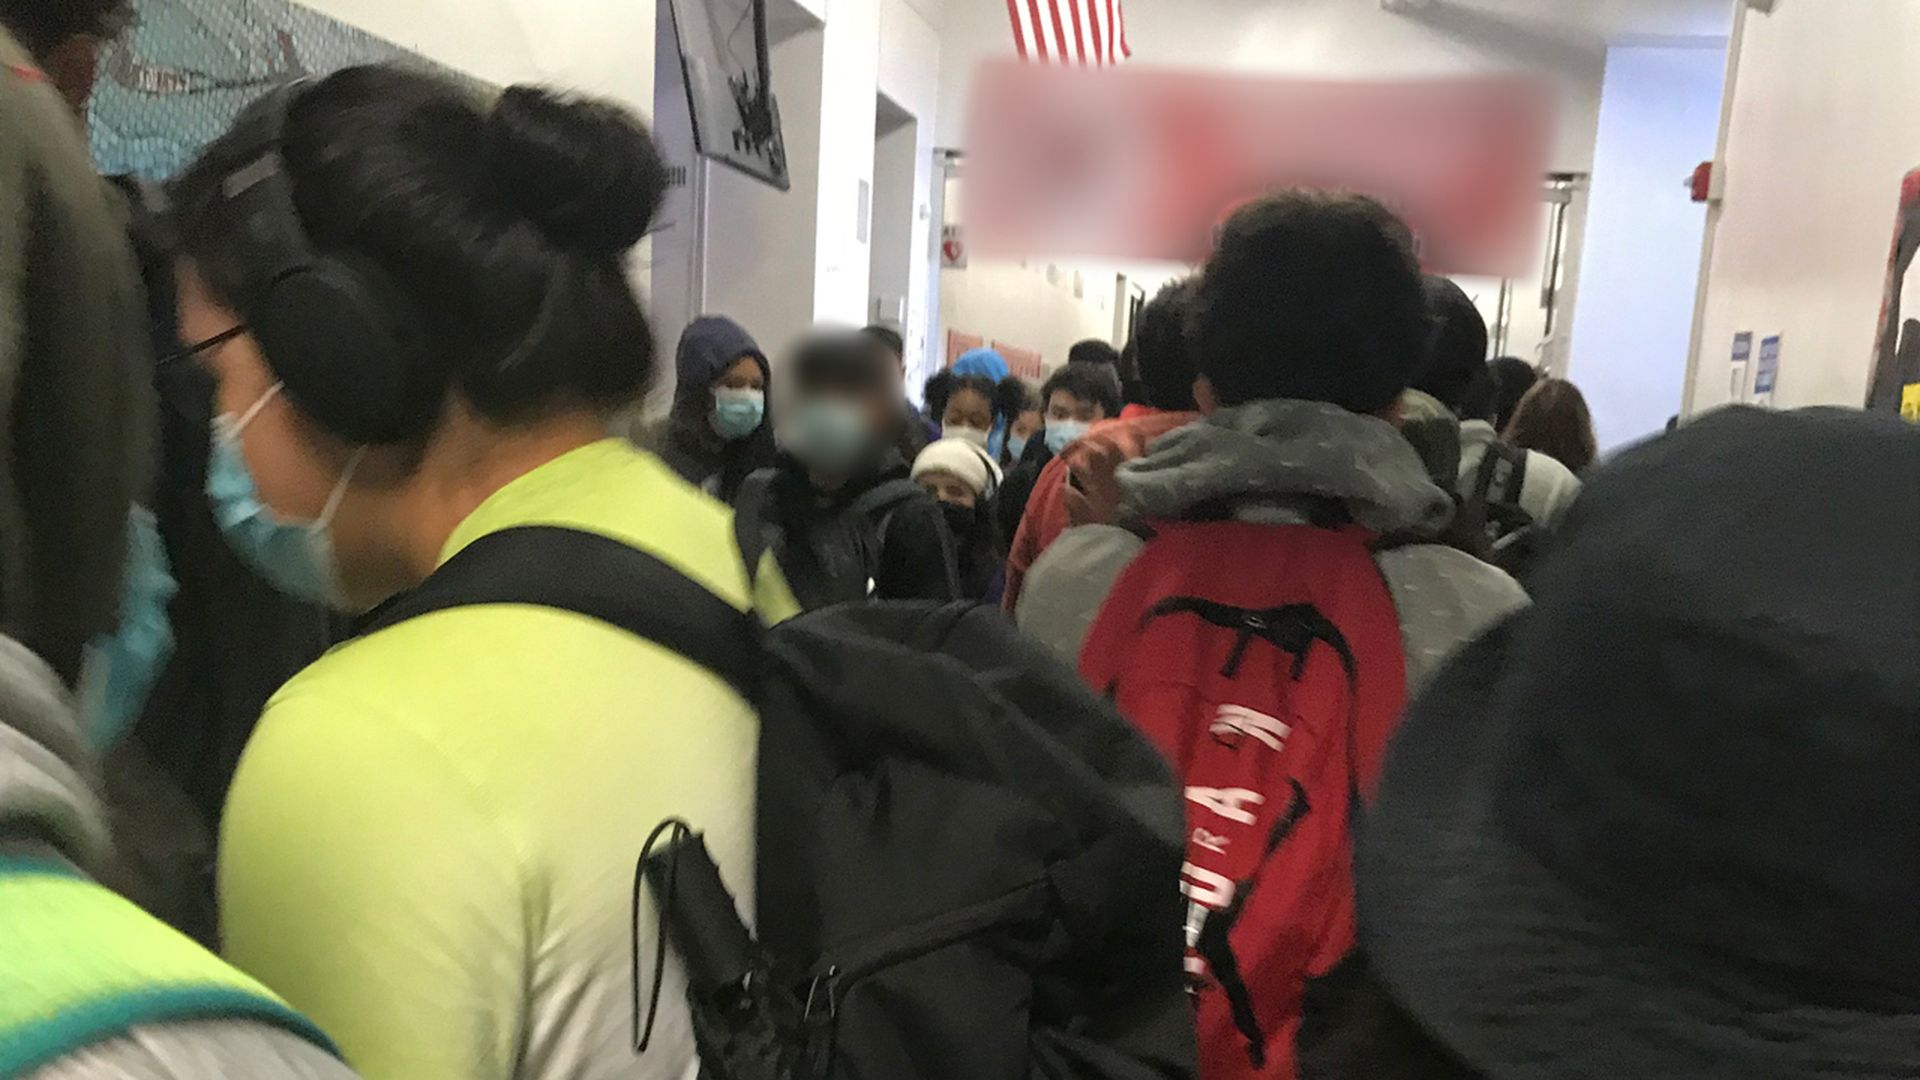 Kids in a crowded school hallway. 